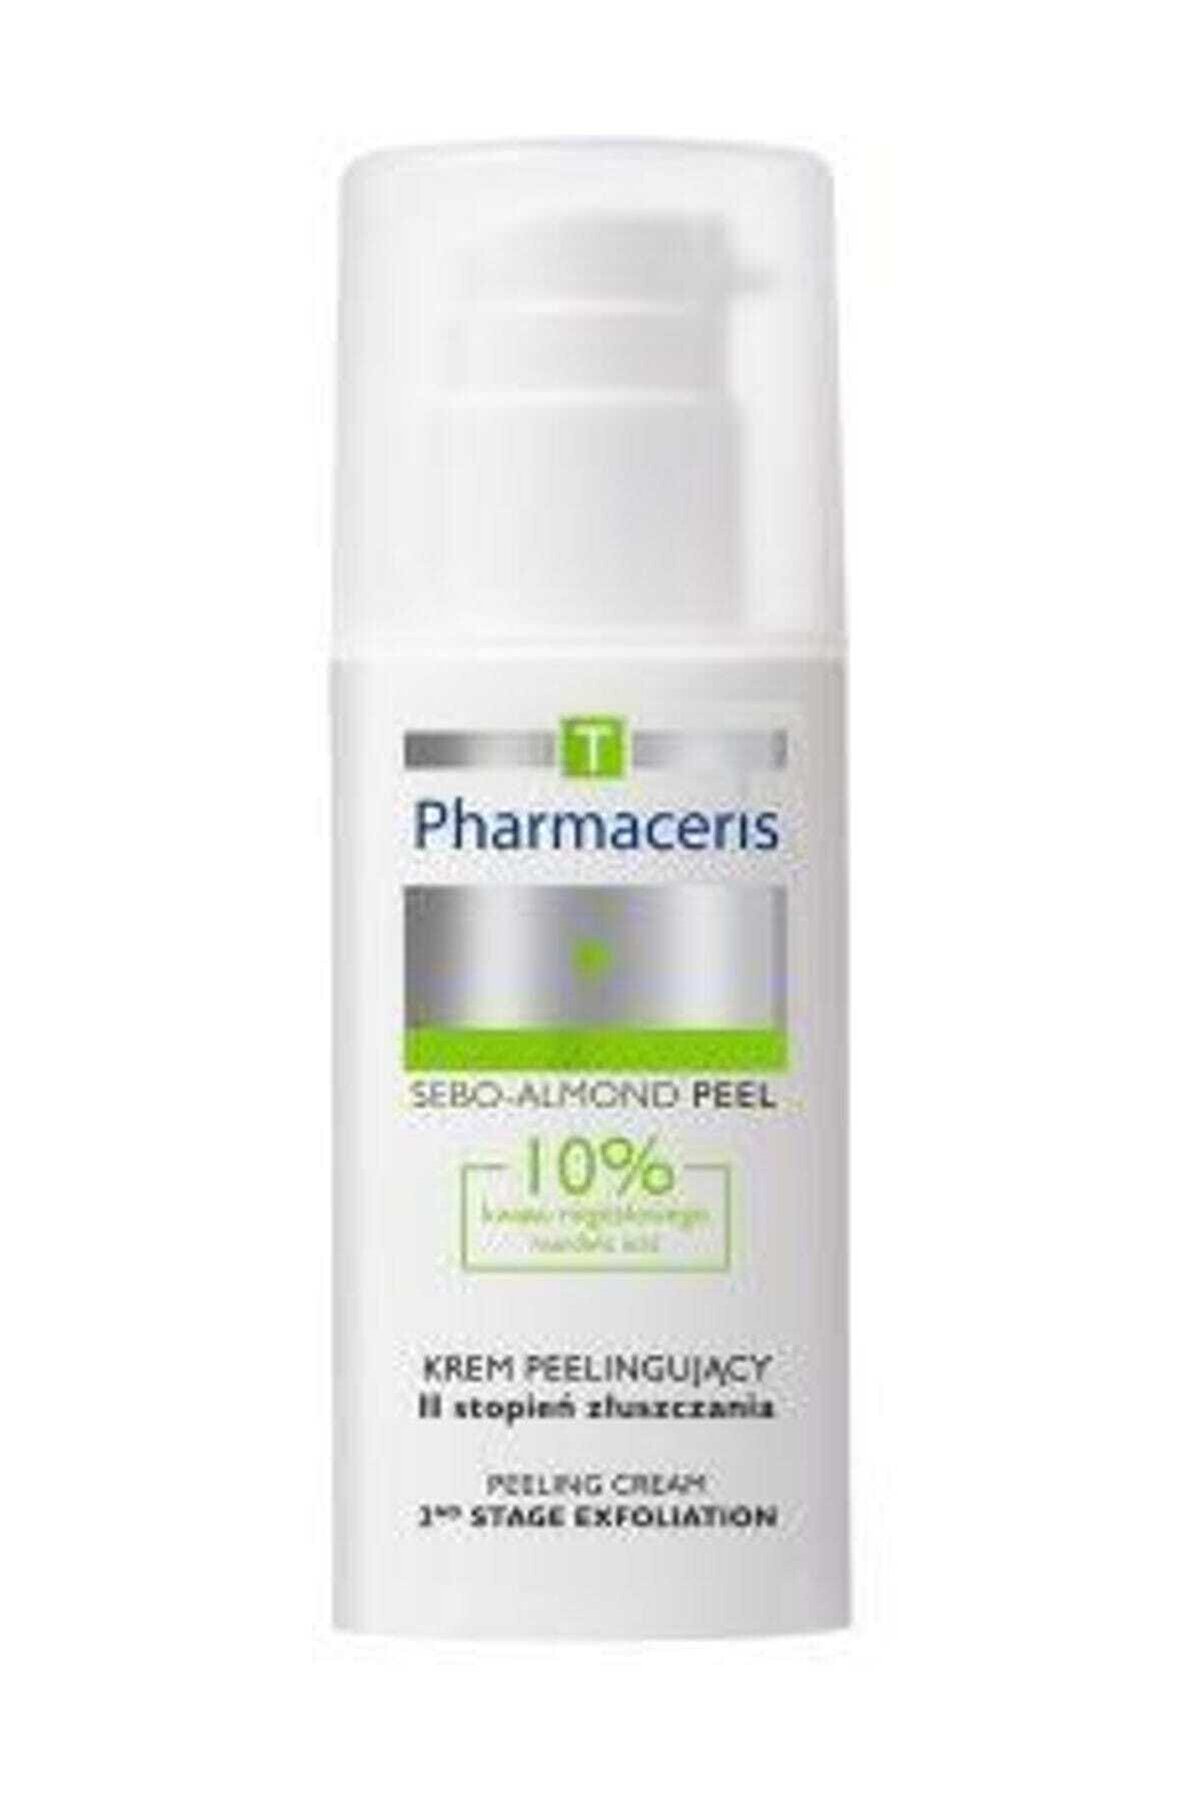 Pharmaceris Seboalmond Peel %10 Exfoliating Night Cream 50 Ml